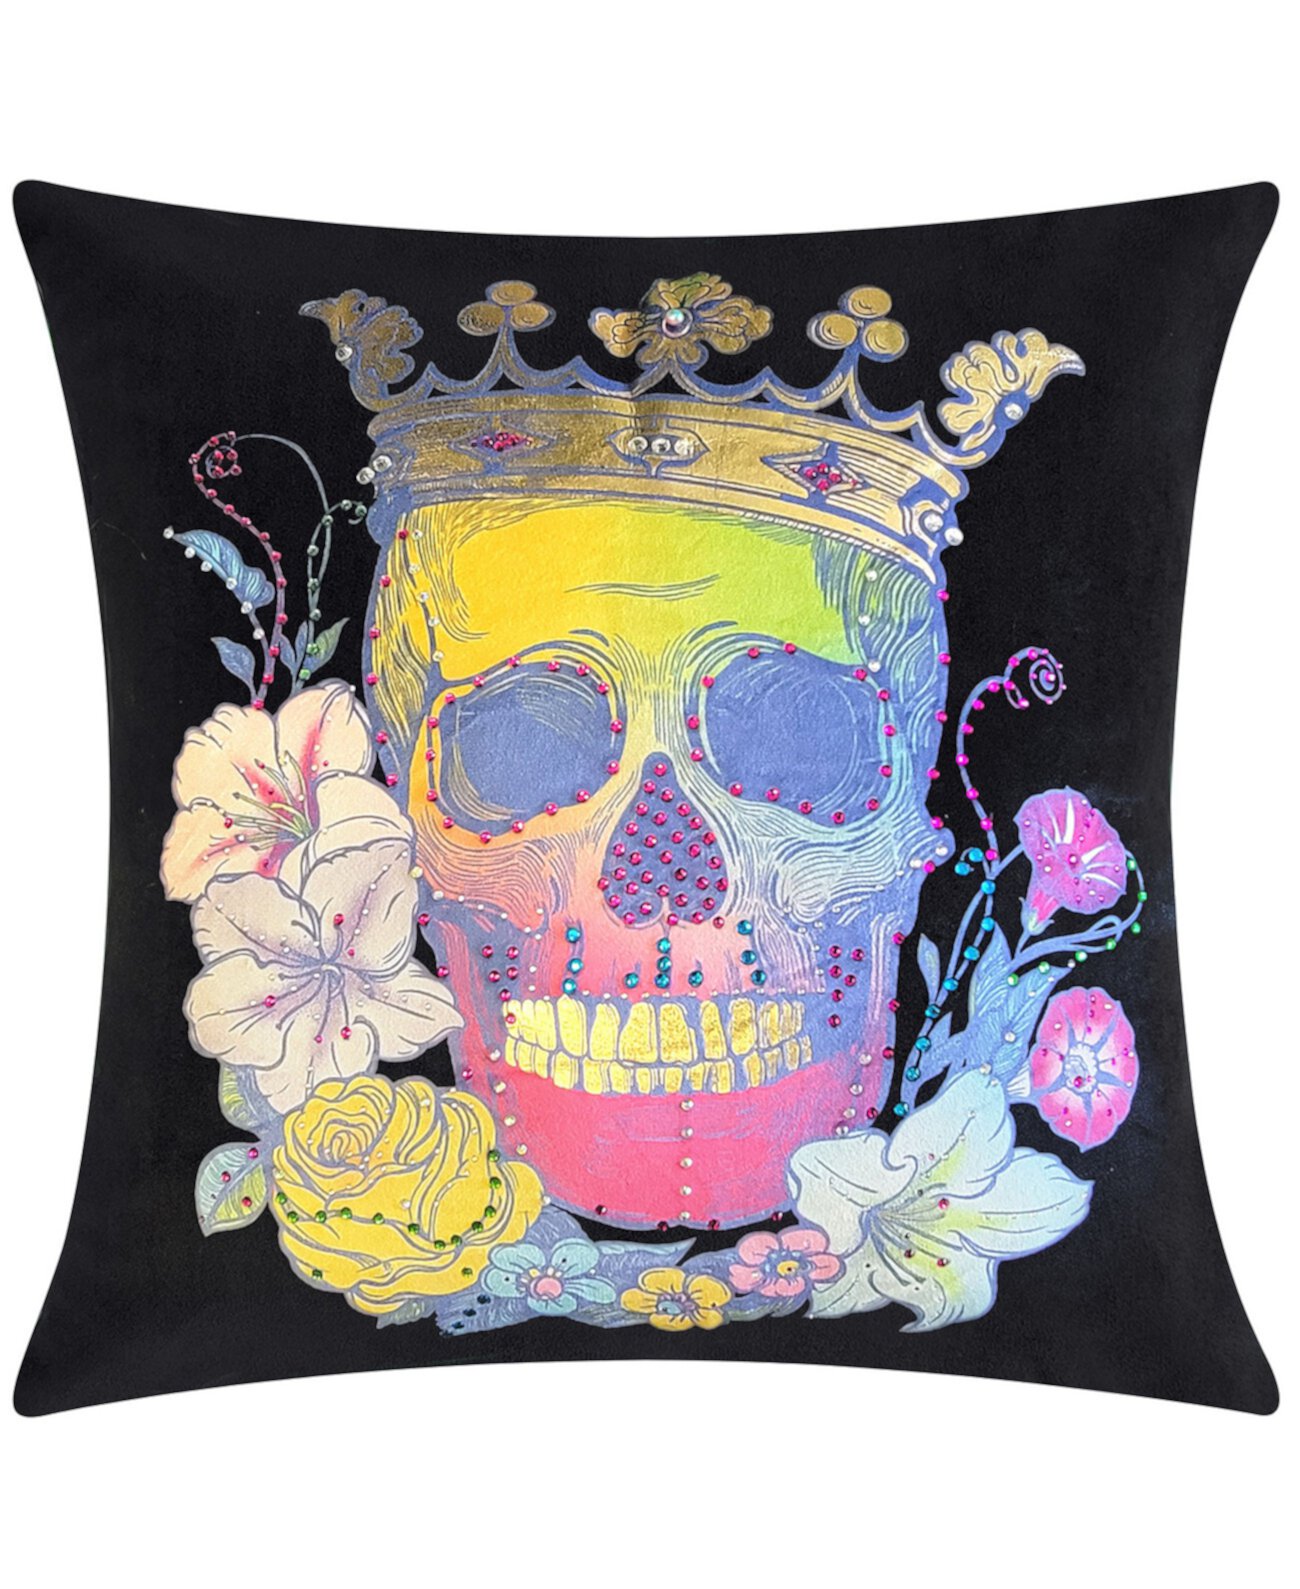 Бархатная декоративная подушка со скелетом «День мертвых», Хэллоуин, 18 x 18 дюймов Edie@Home